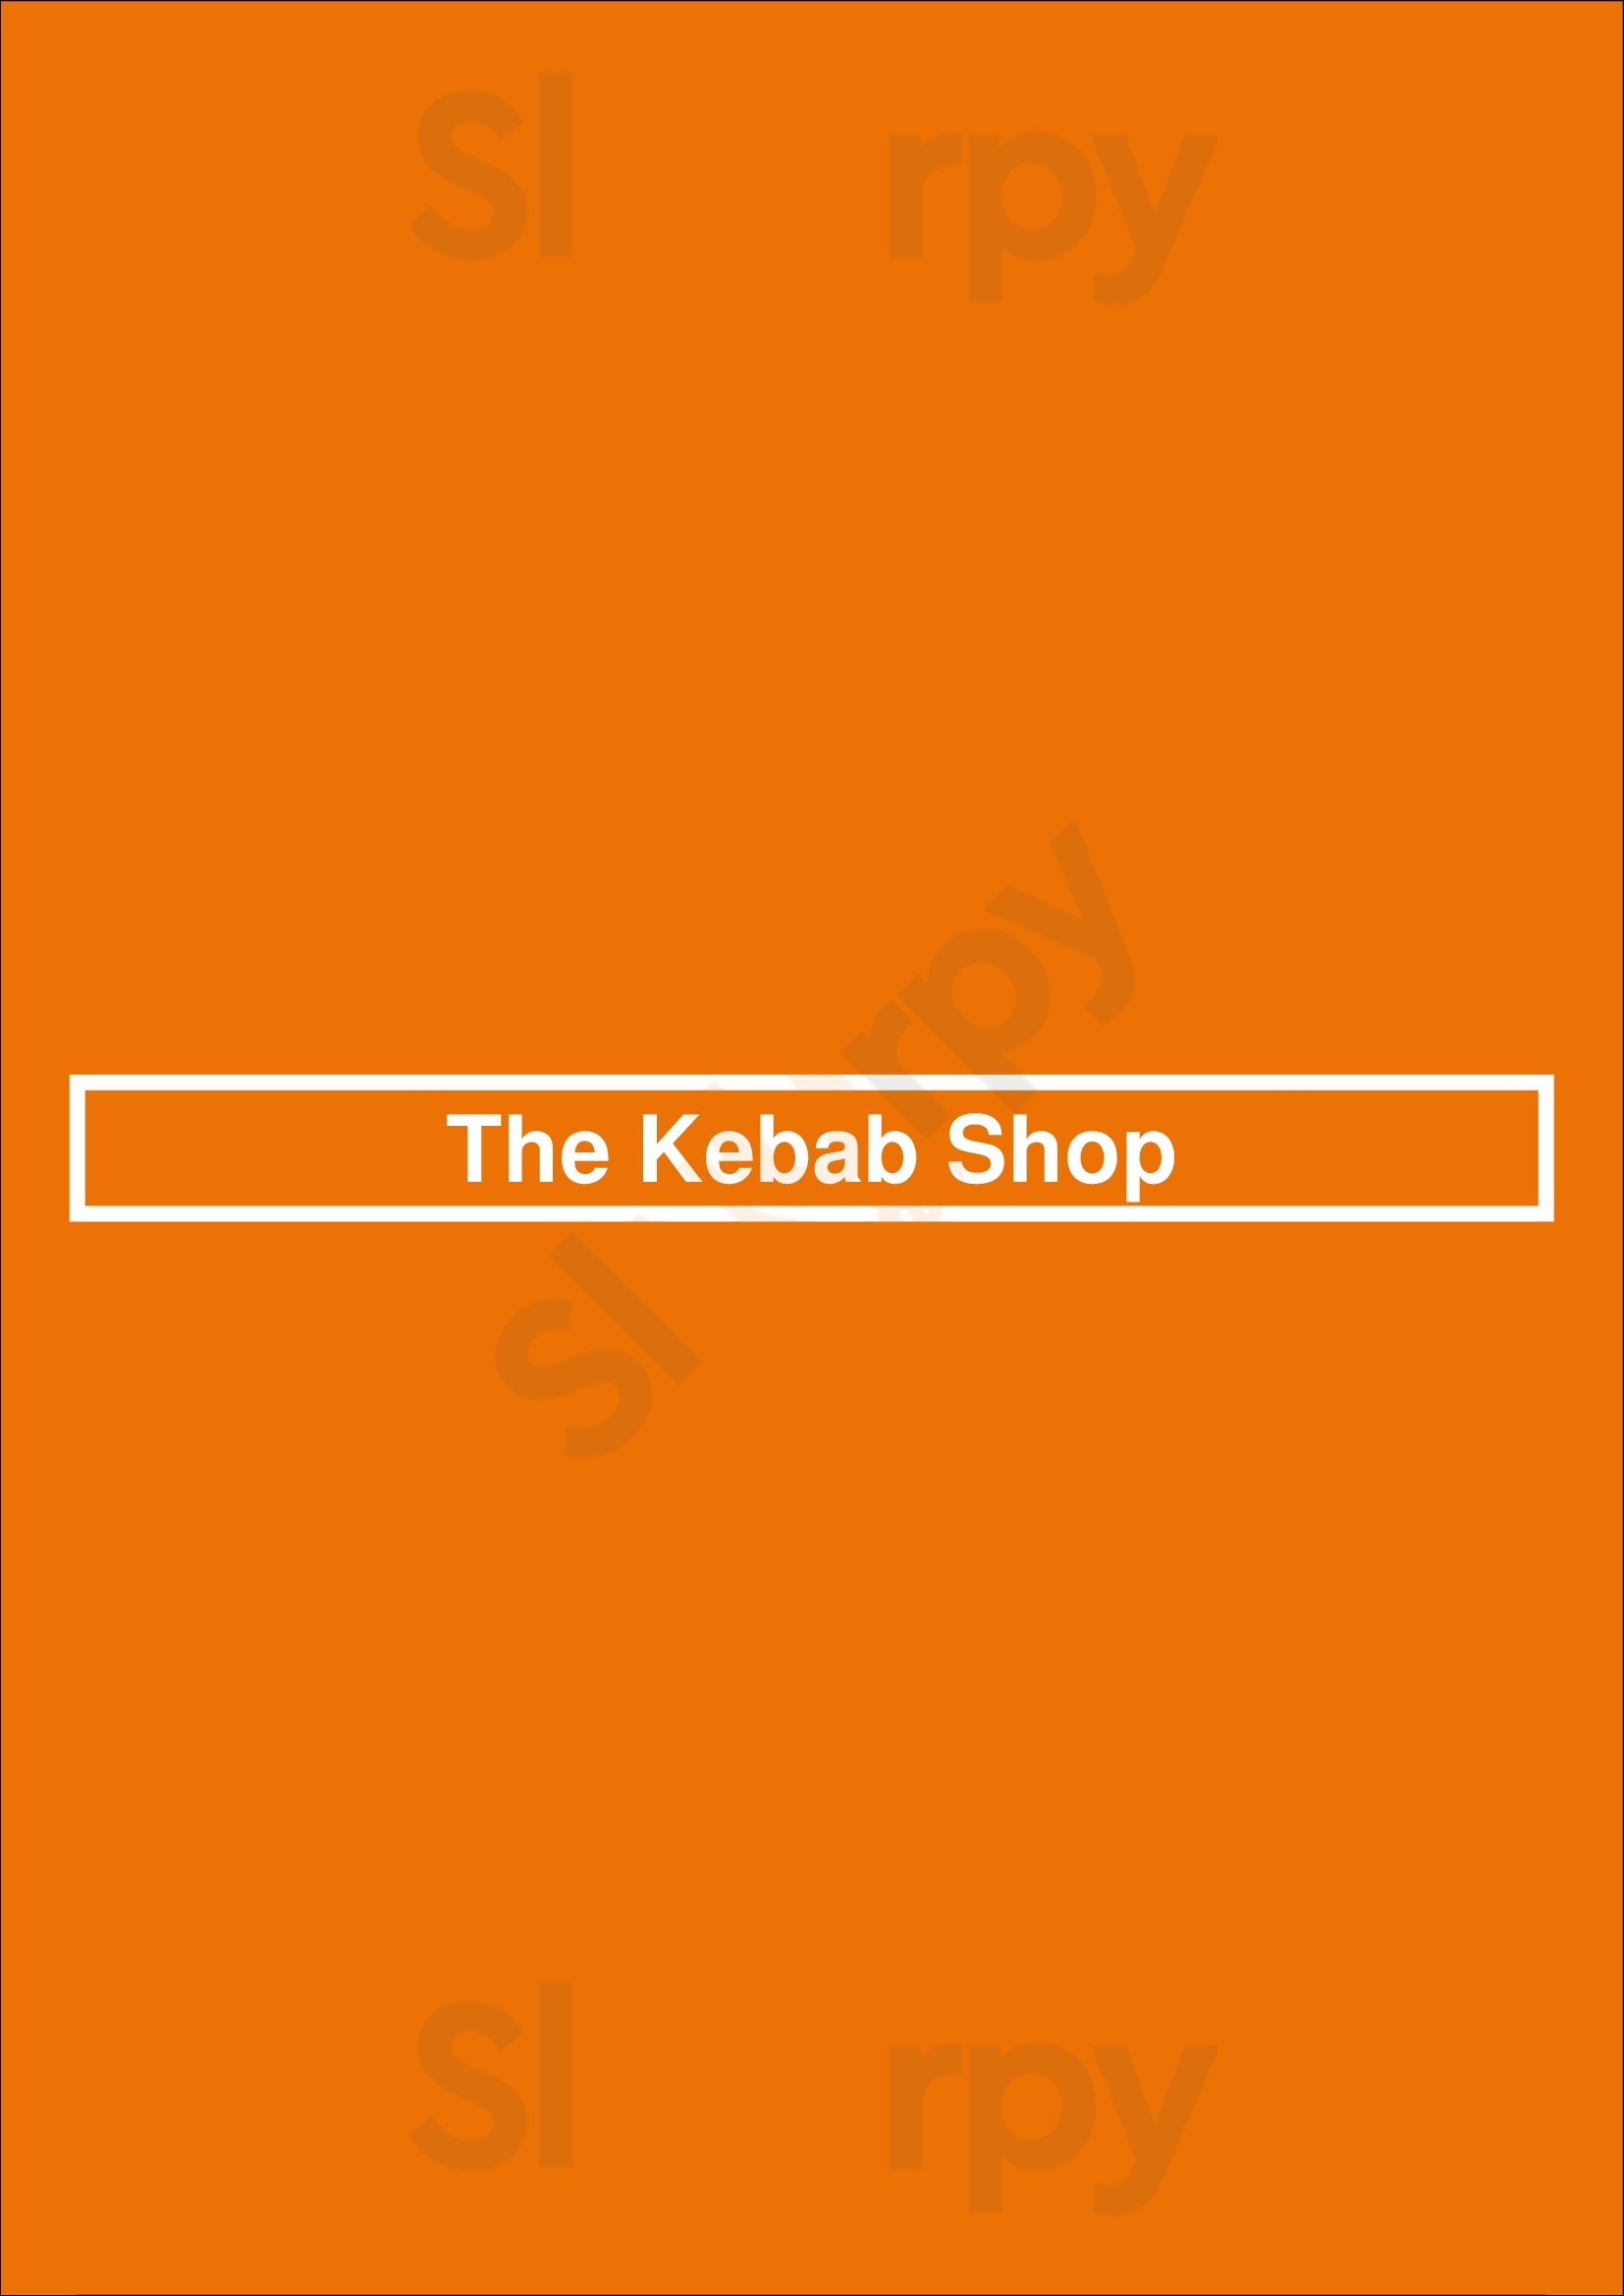 The Kebab Shop San Diego Menu - 1